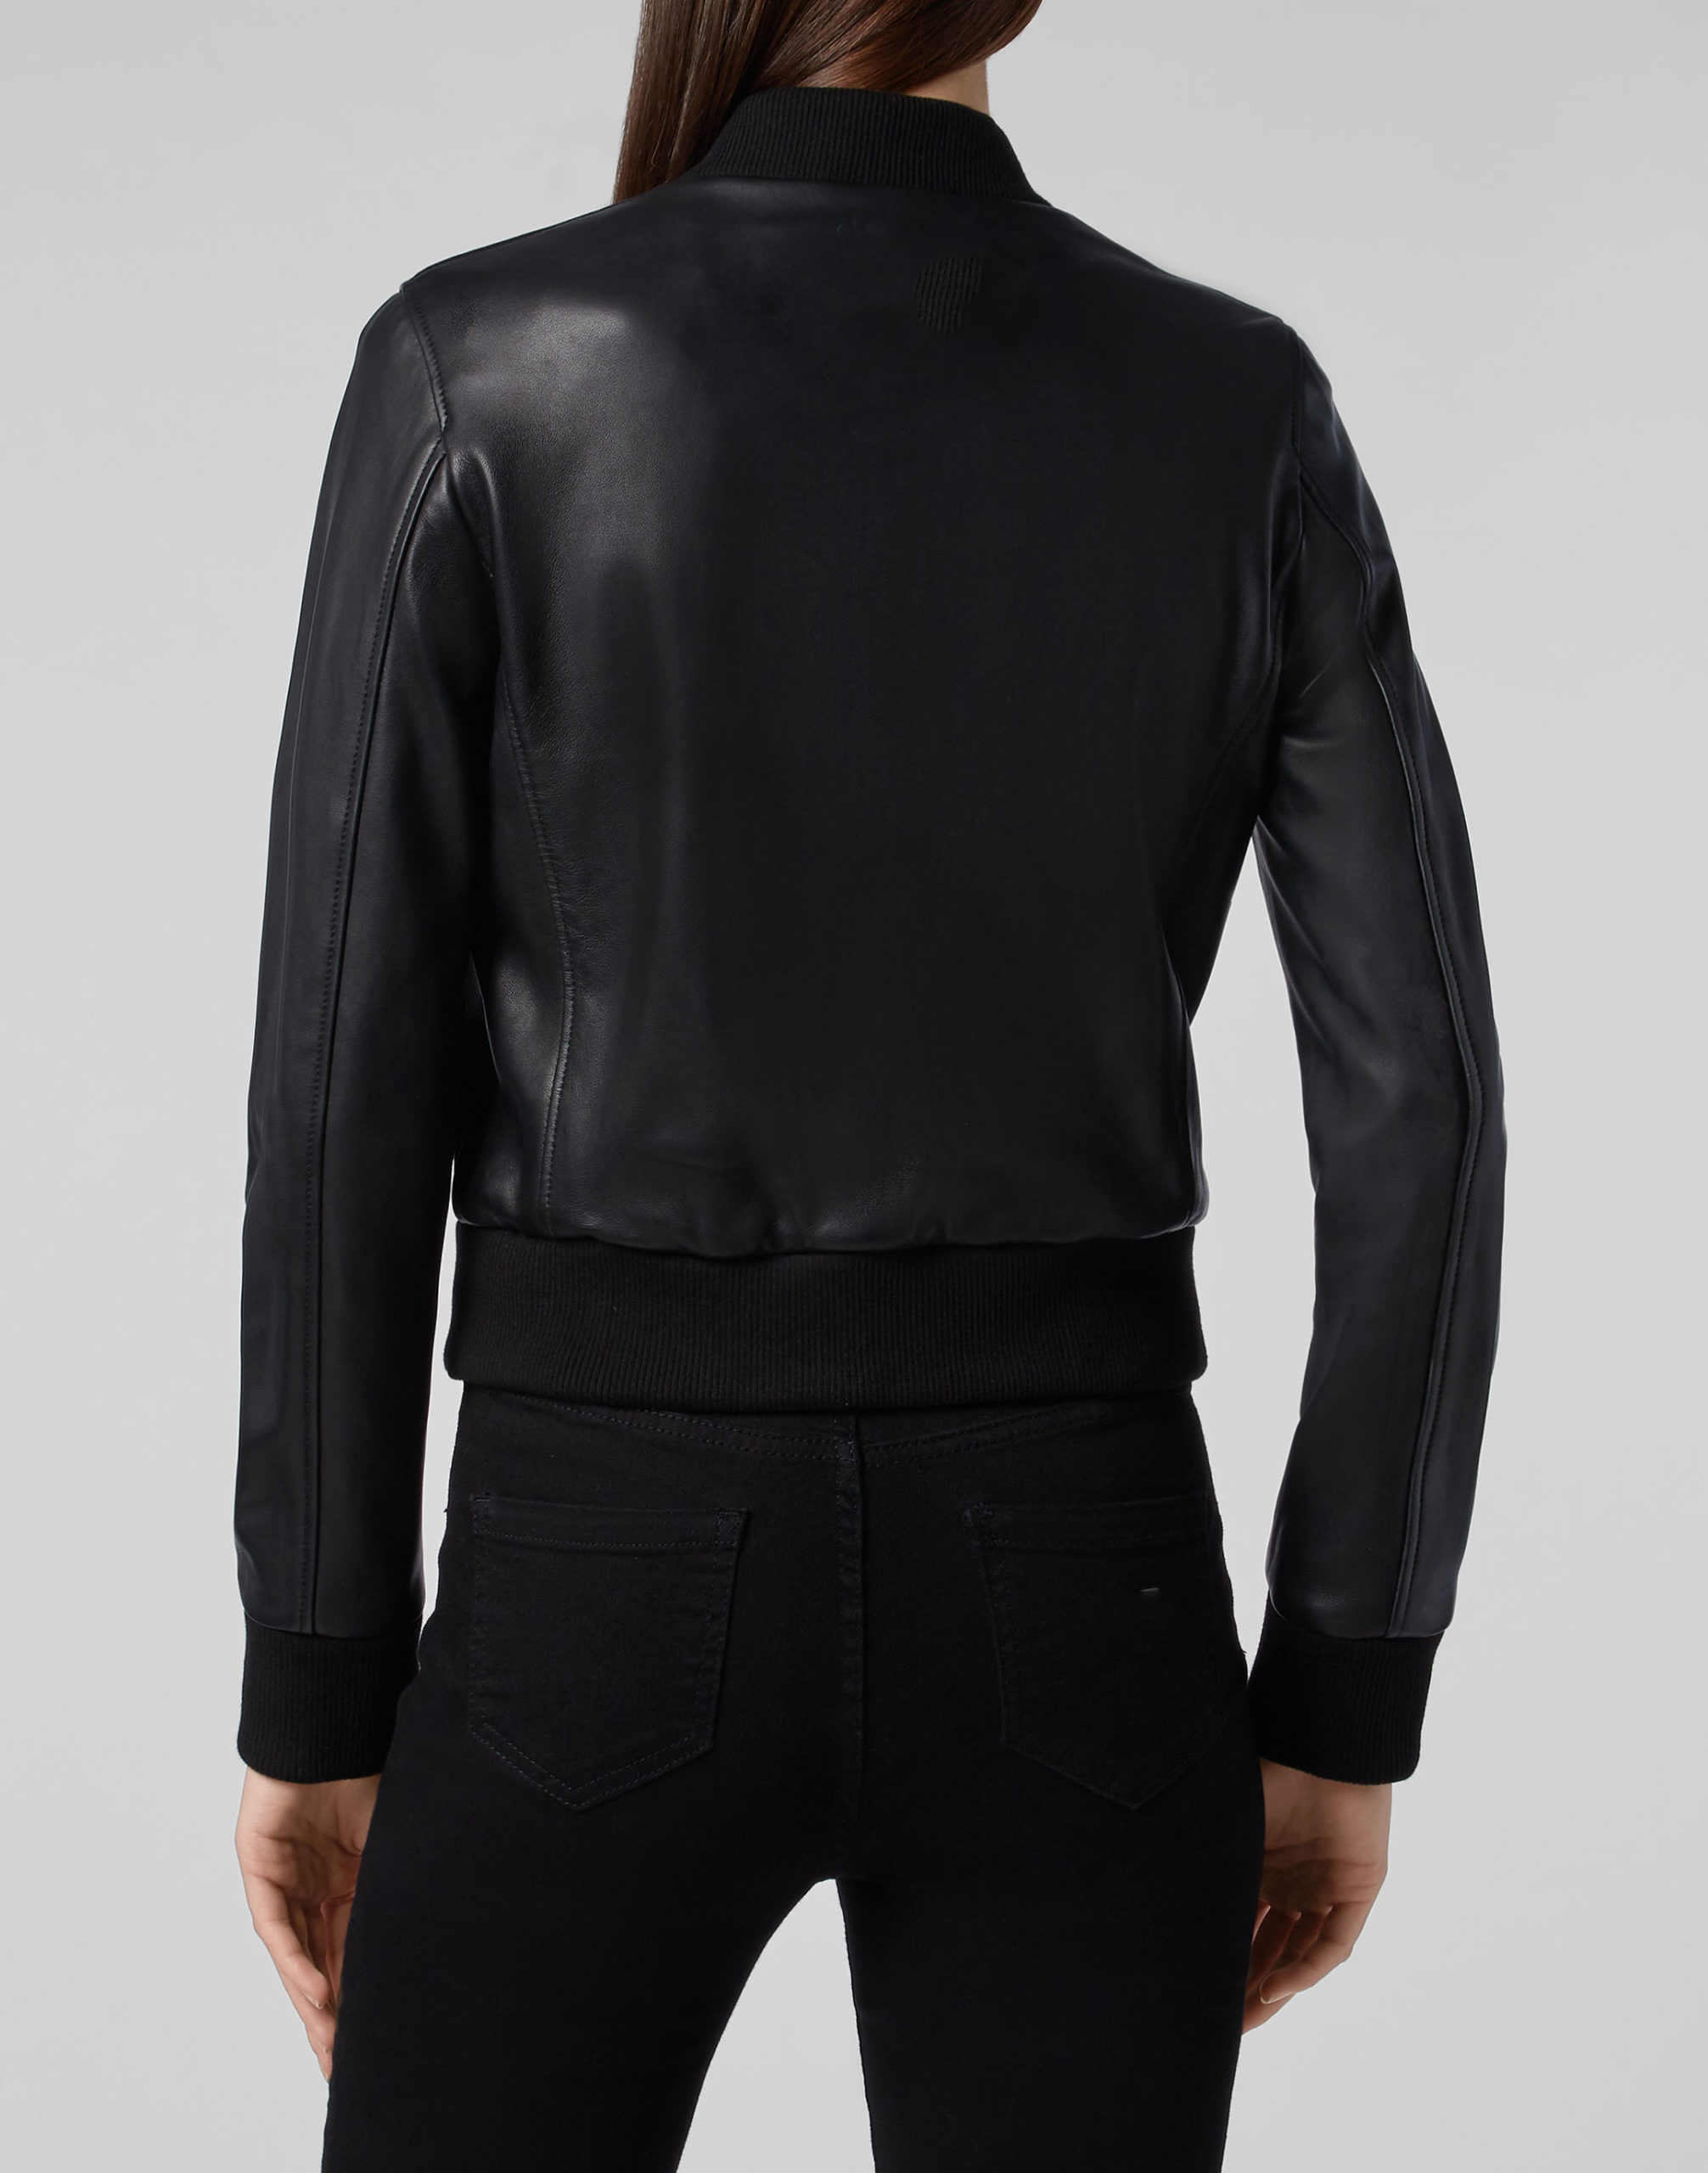 Black Leather Studded Bomber Jacket - Maker of Jacket